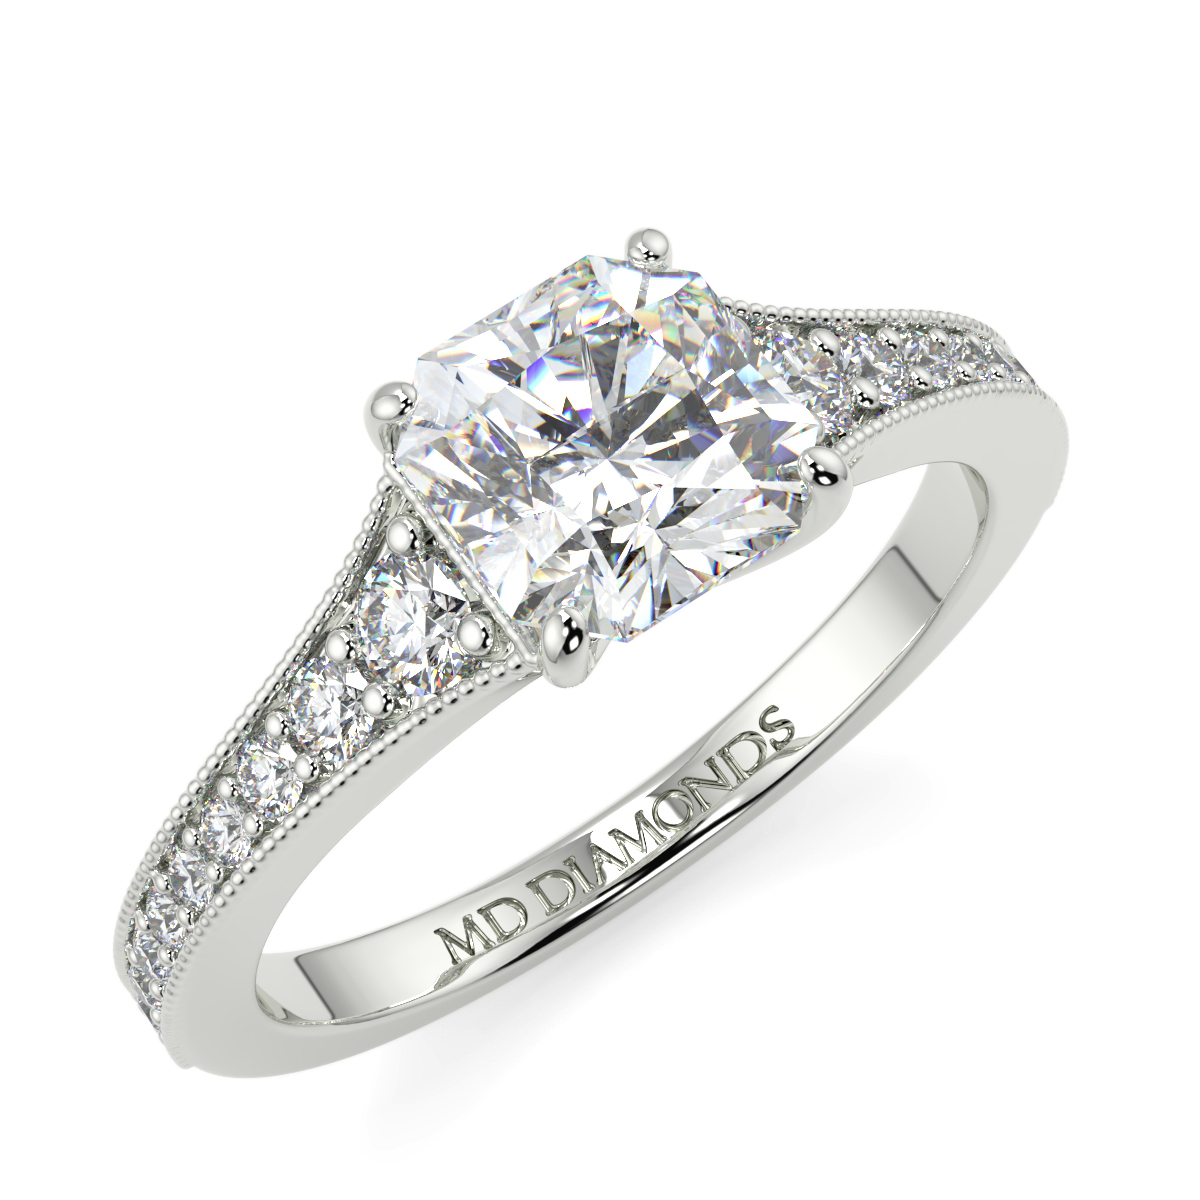 Assher Pave Set Milgrained Diamond Ring